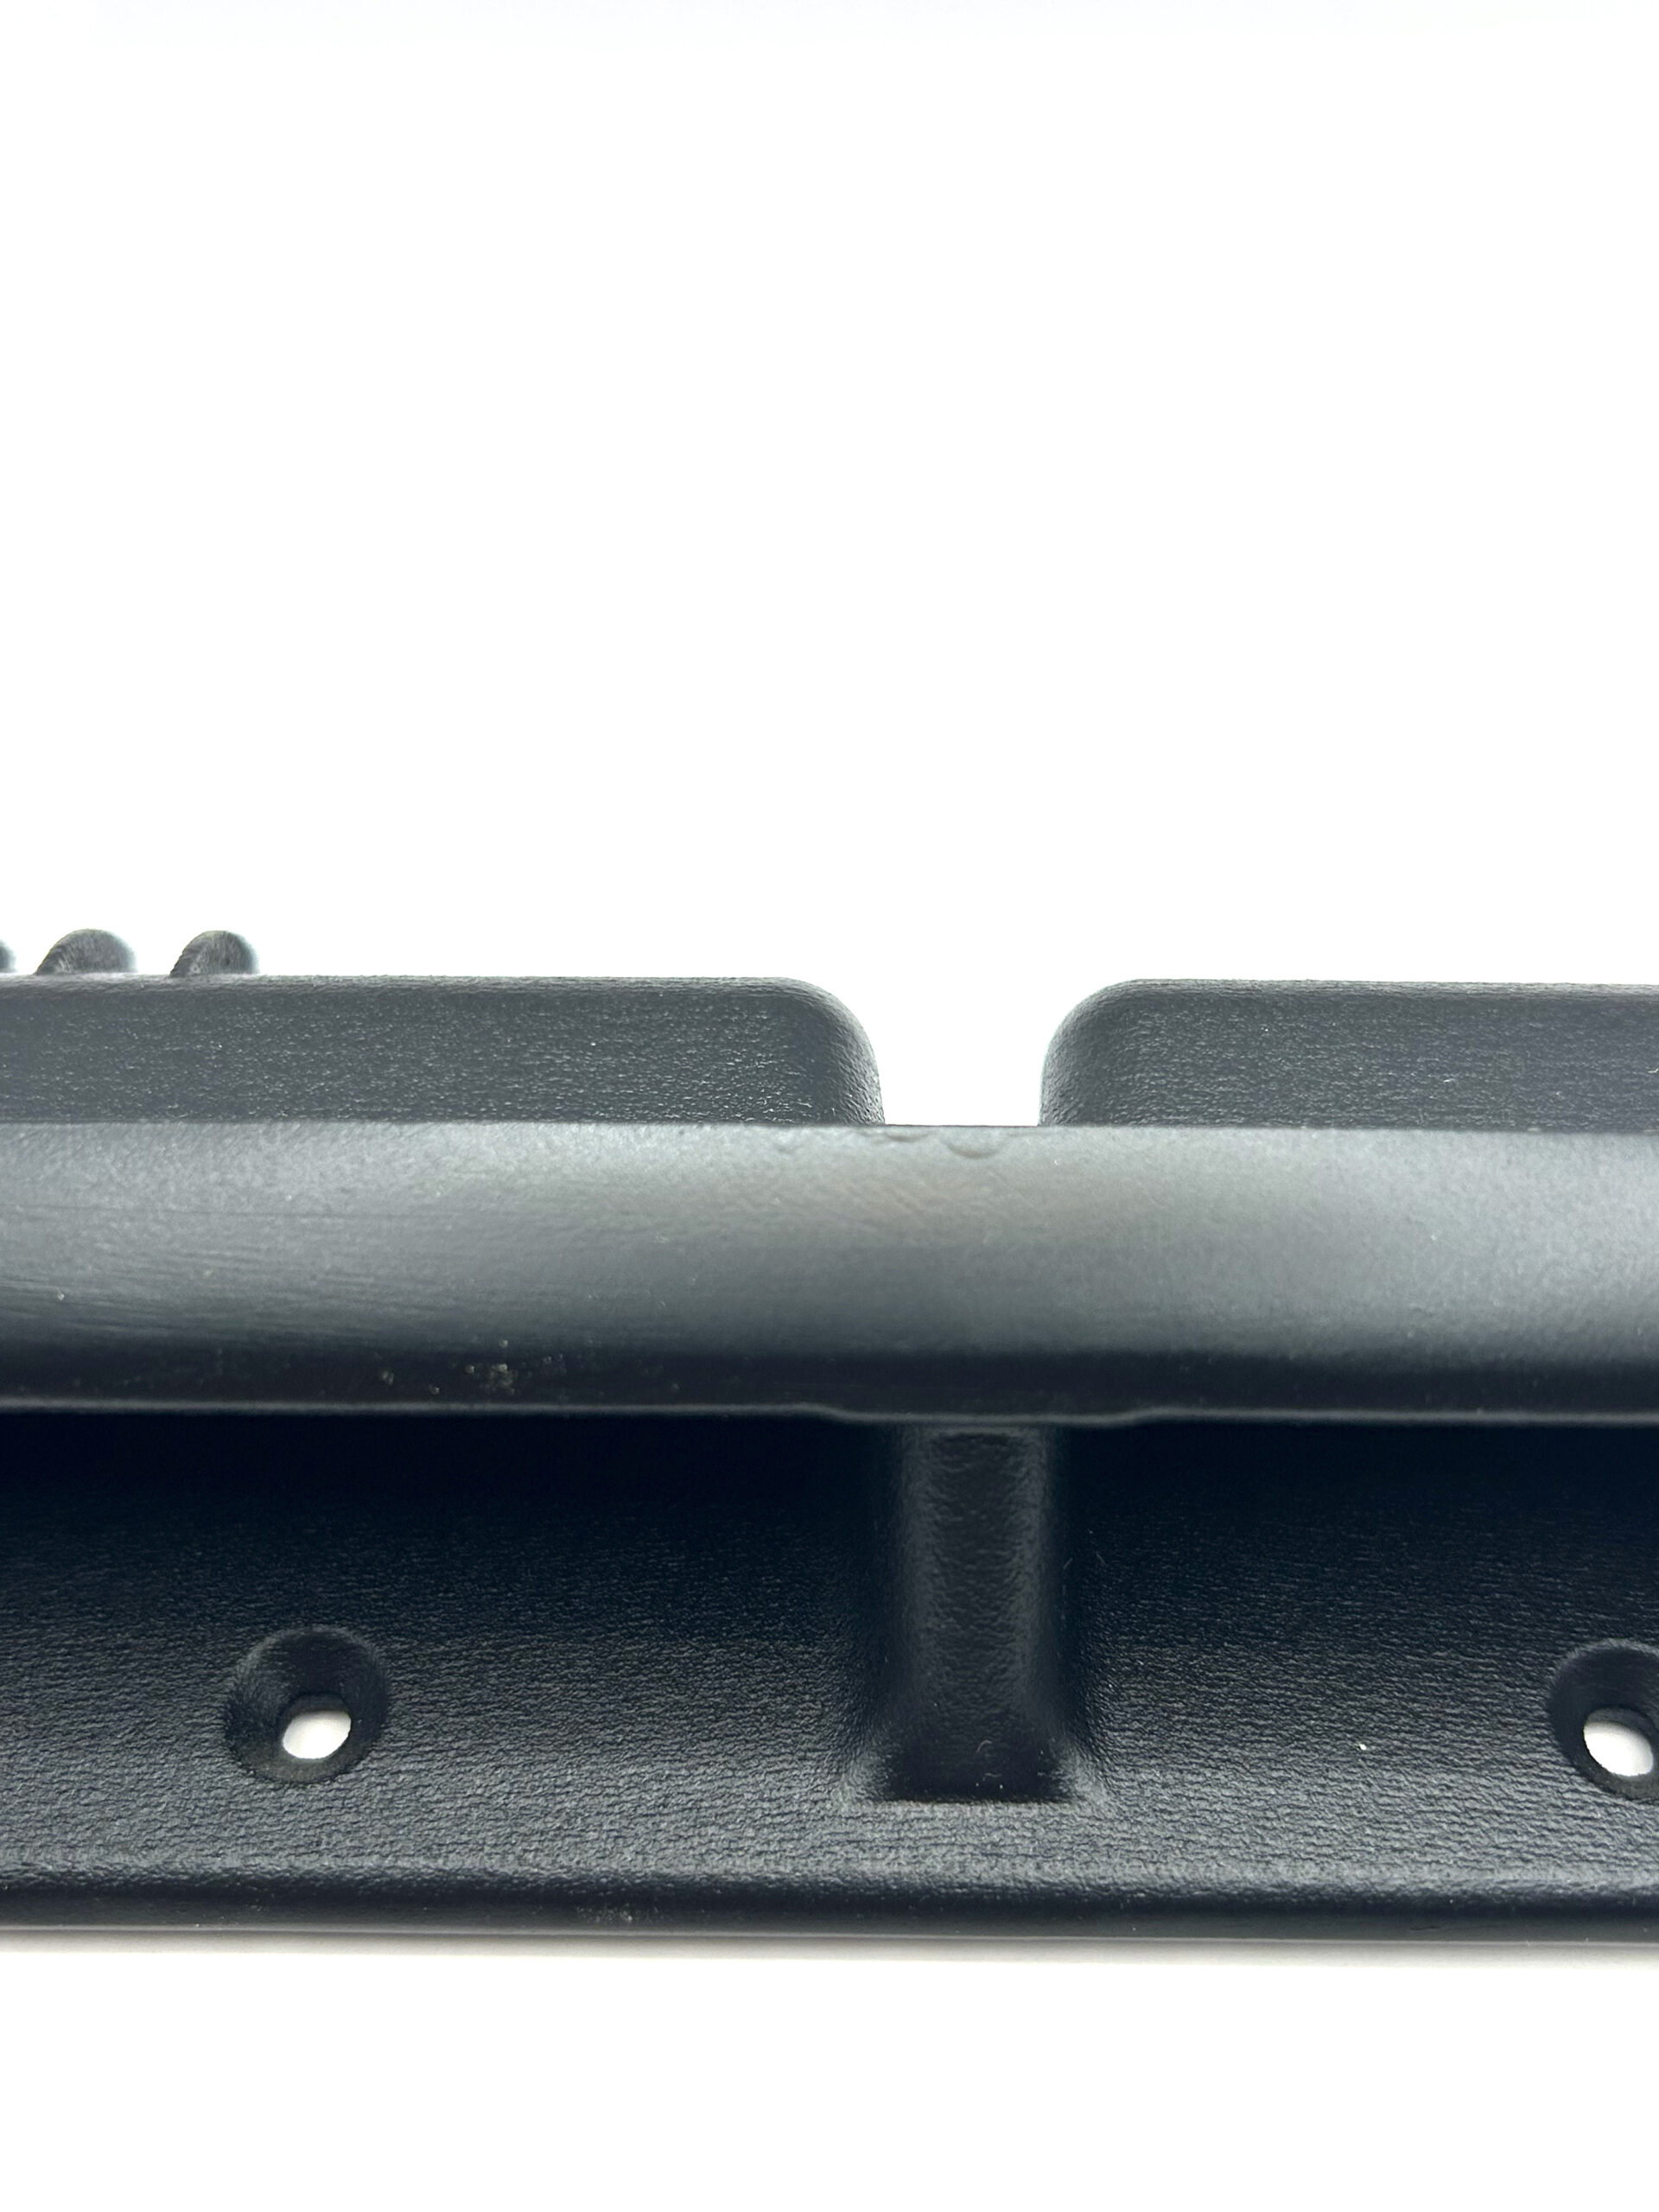 A124 Soft Top Handle Black(A12477800558412, W124 cabriolet) (Outlet)